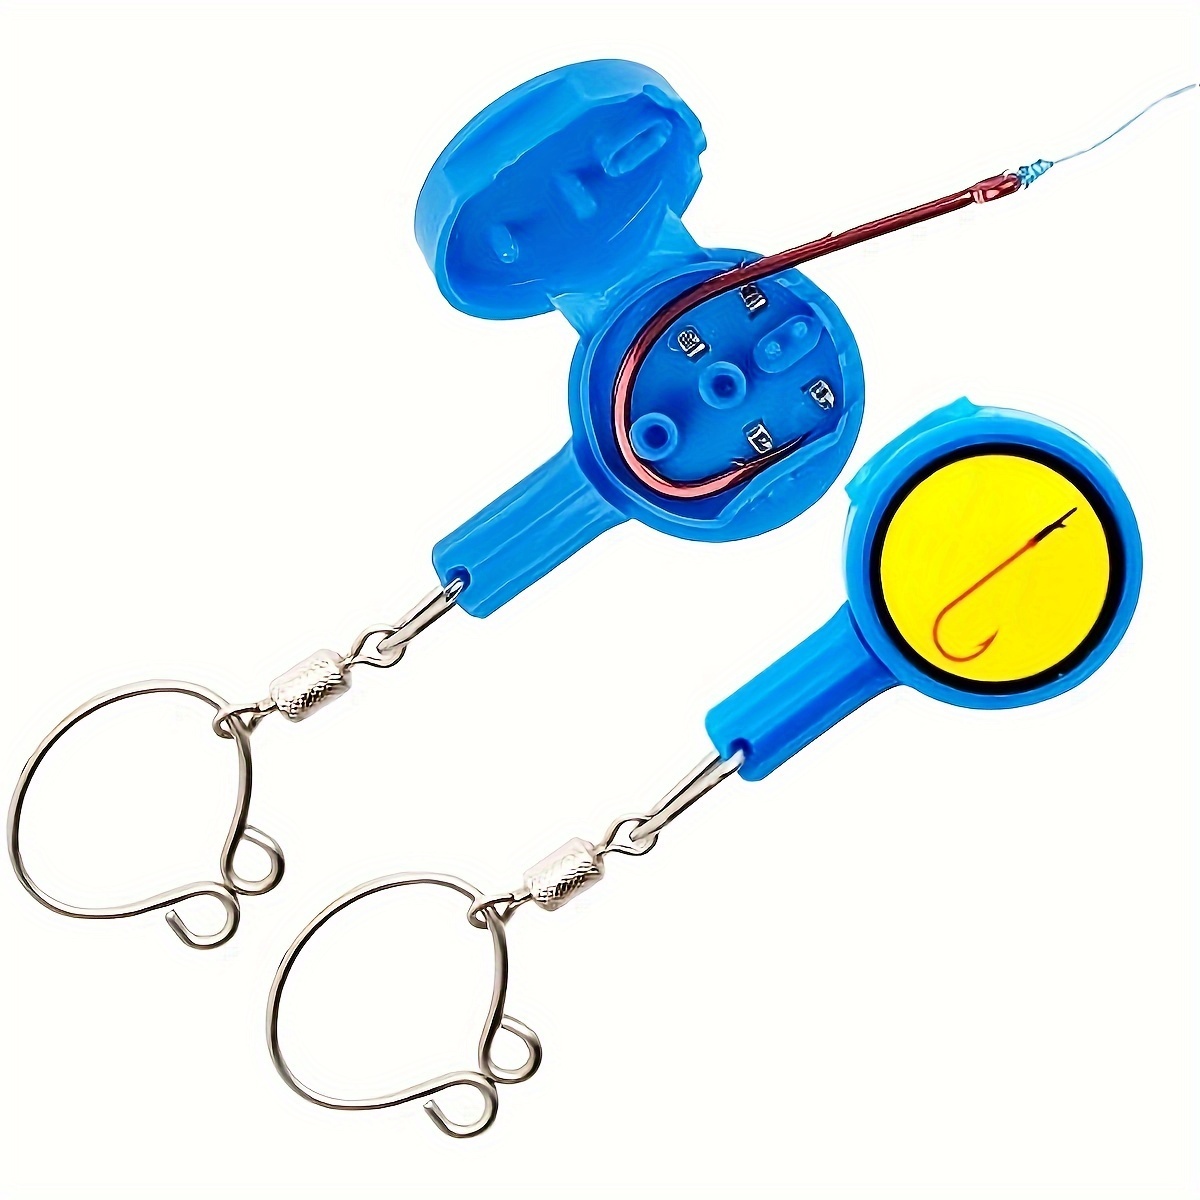 Hook Knot Tying Tool - Fly Fishing Equipment Multifunction